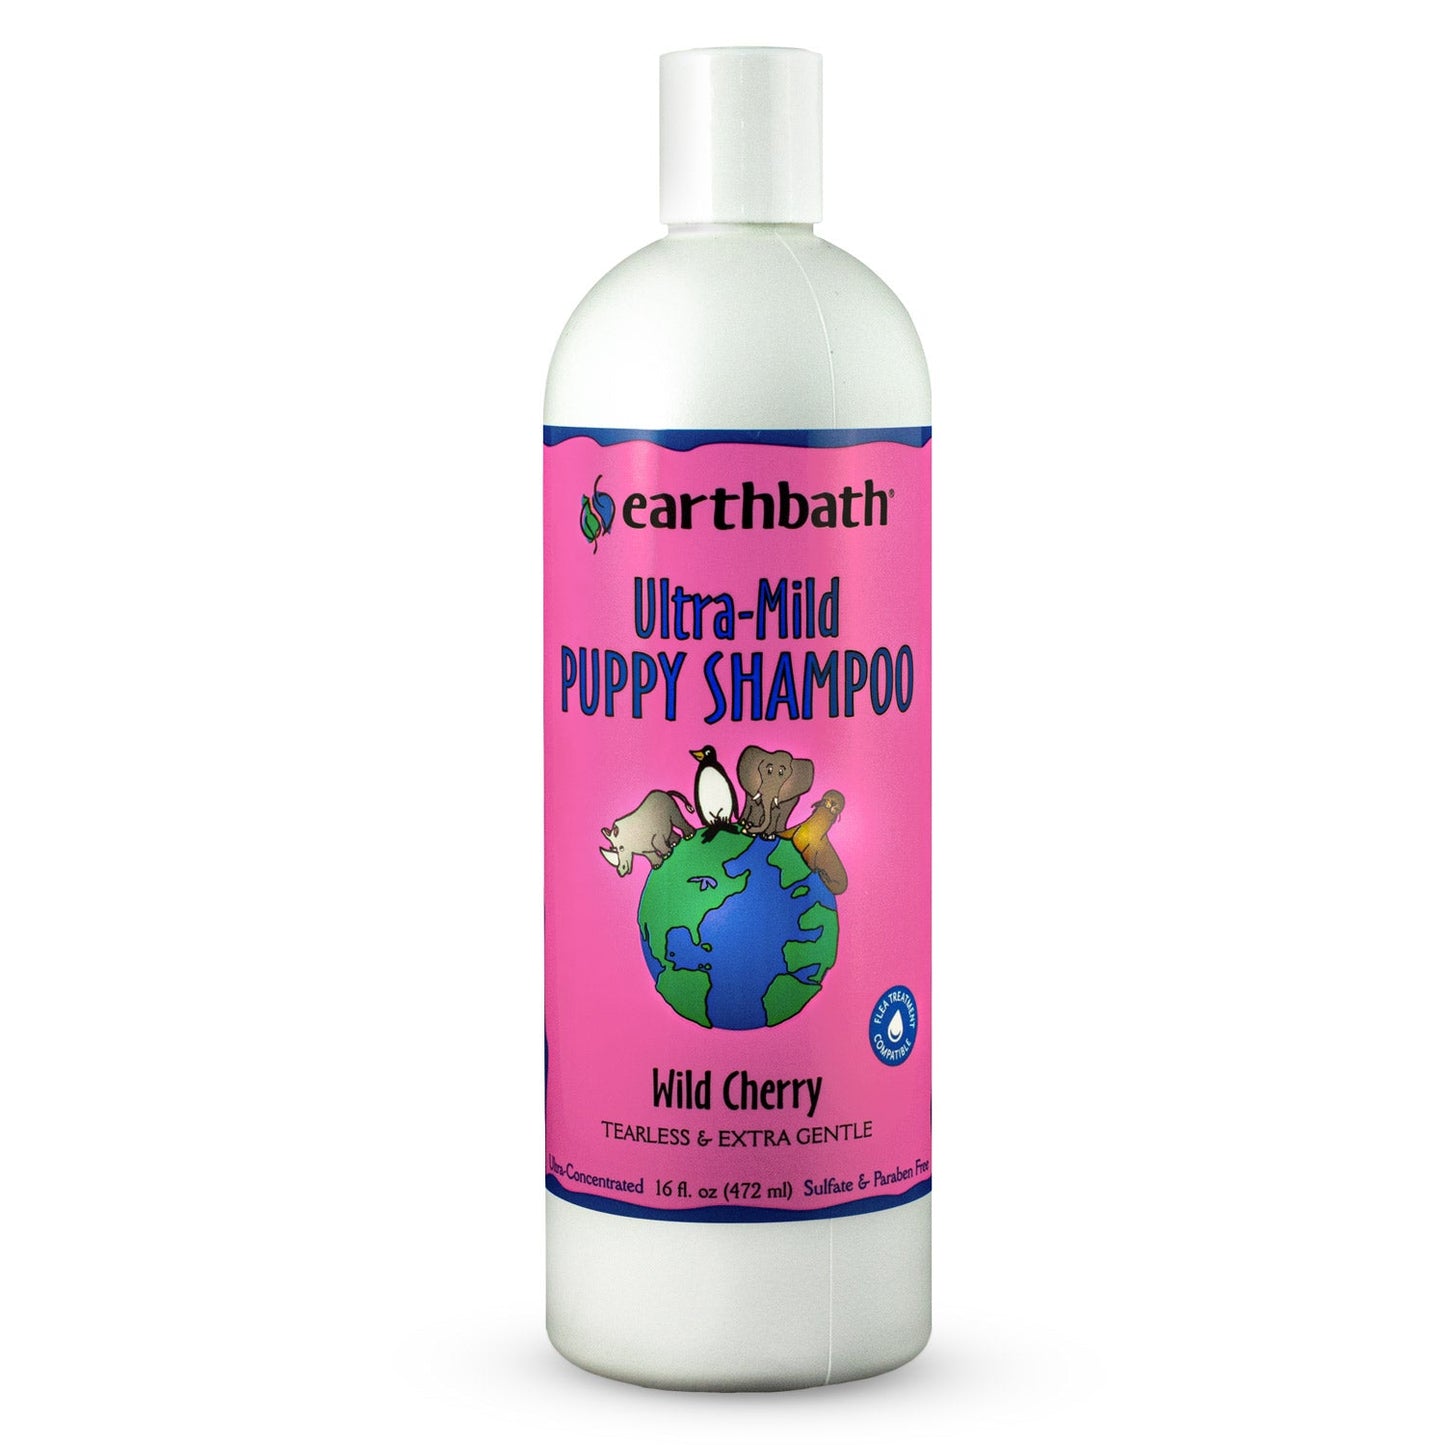 earthbath® Ultra-Mild Puppy Shampoo, Wild Cherry, Tearless & Extra Gentle16 oz